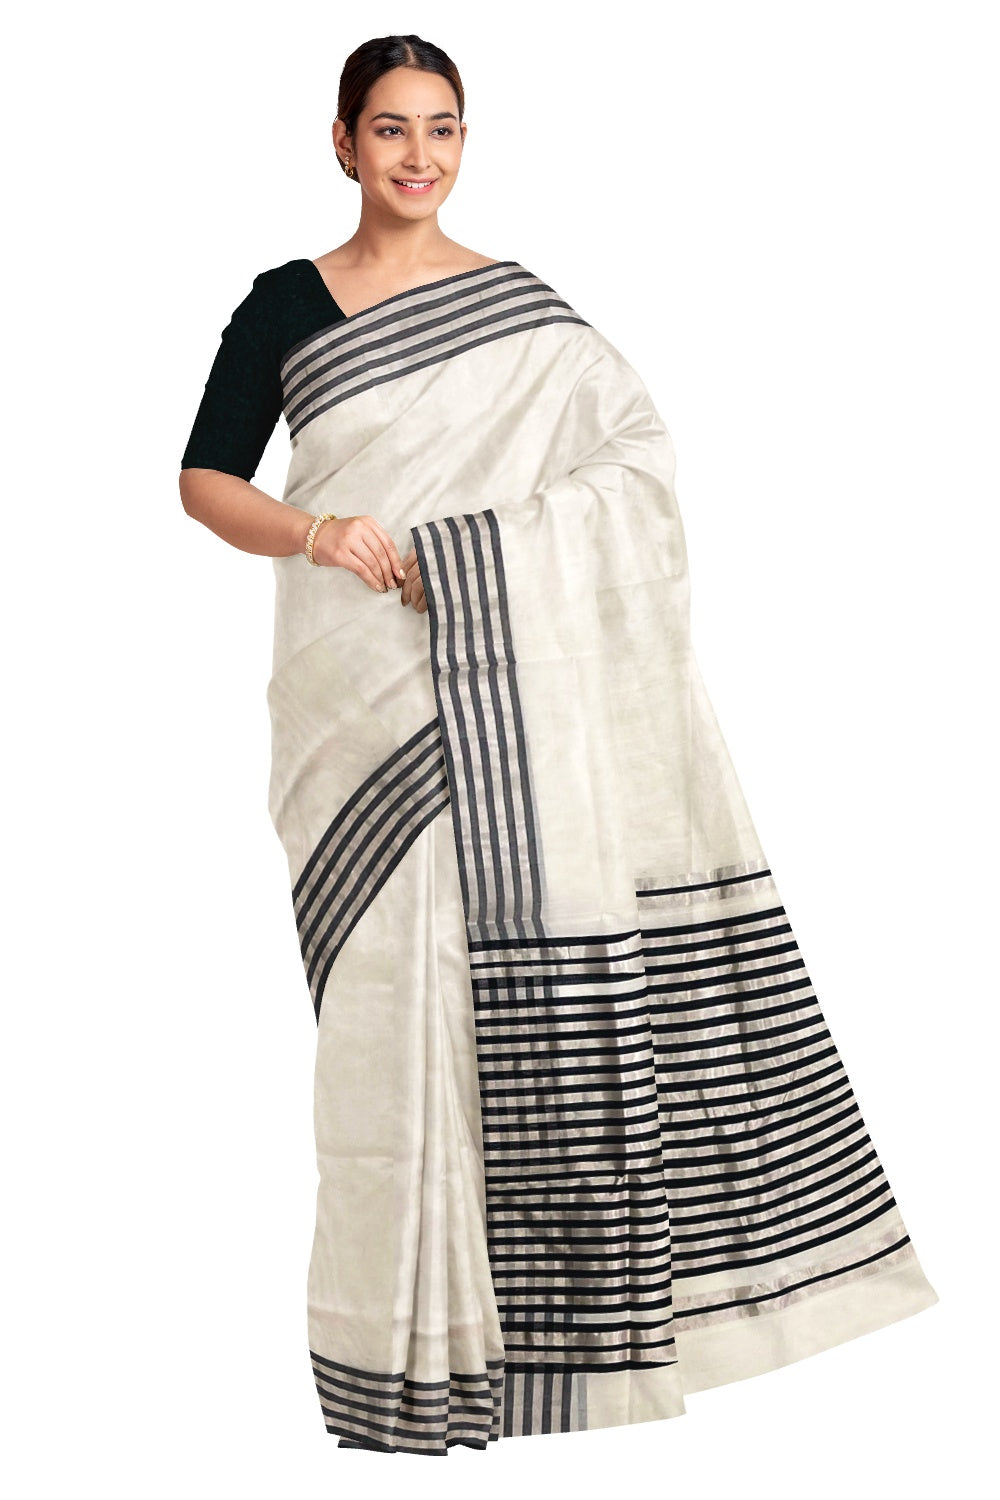 Southloom Premium Handloom Silver Kasavu and Black Katti Kara Saree with Lines Design 15 Inch Pallu